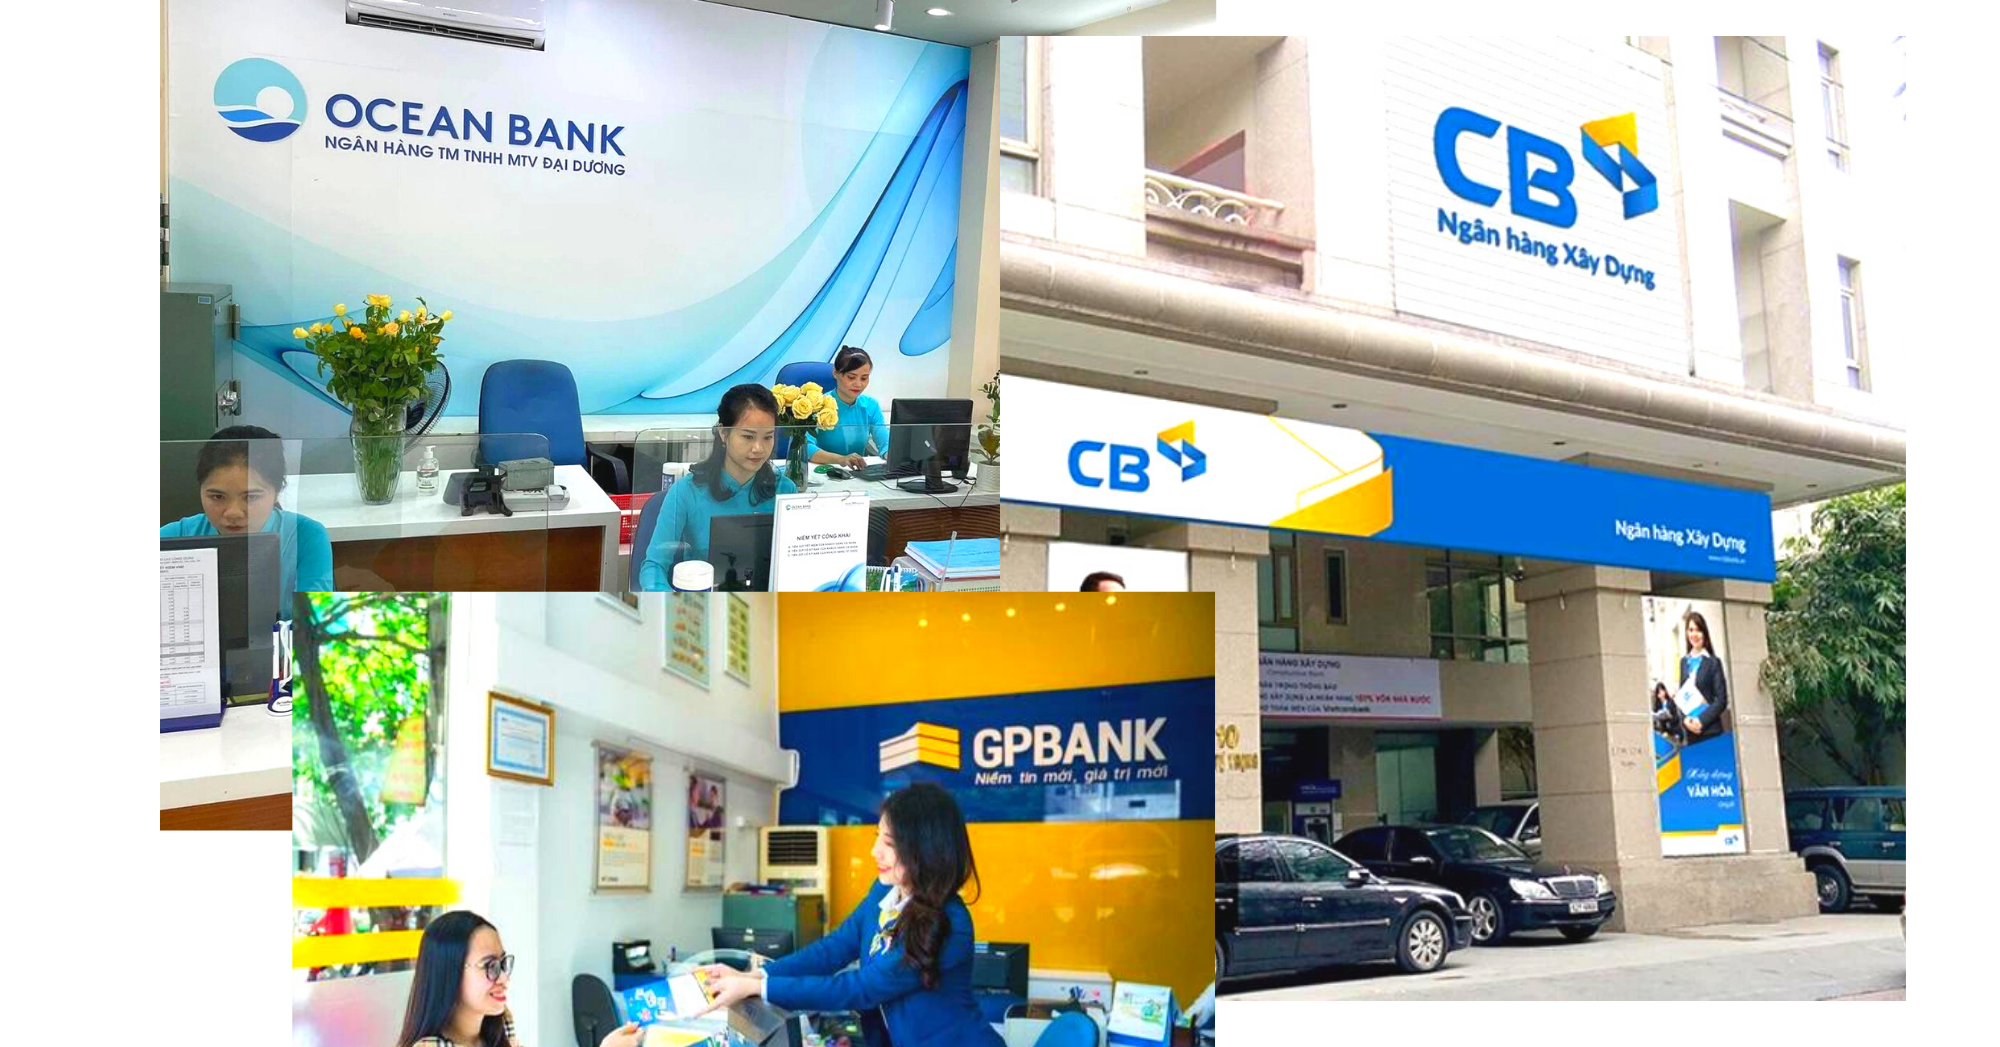 Revealing a weak bank in the hands of “big man” Vietcombank and MB?